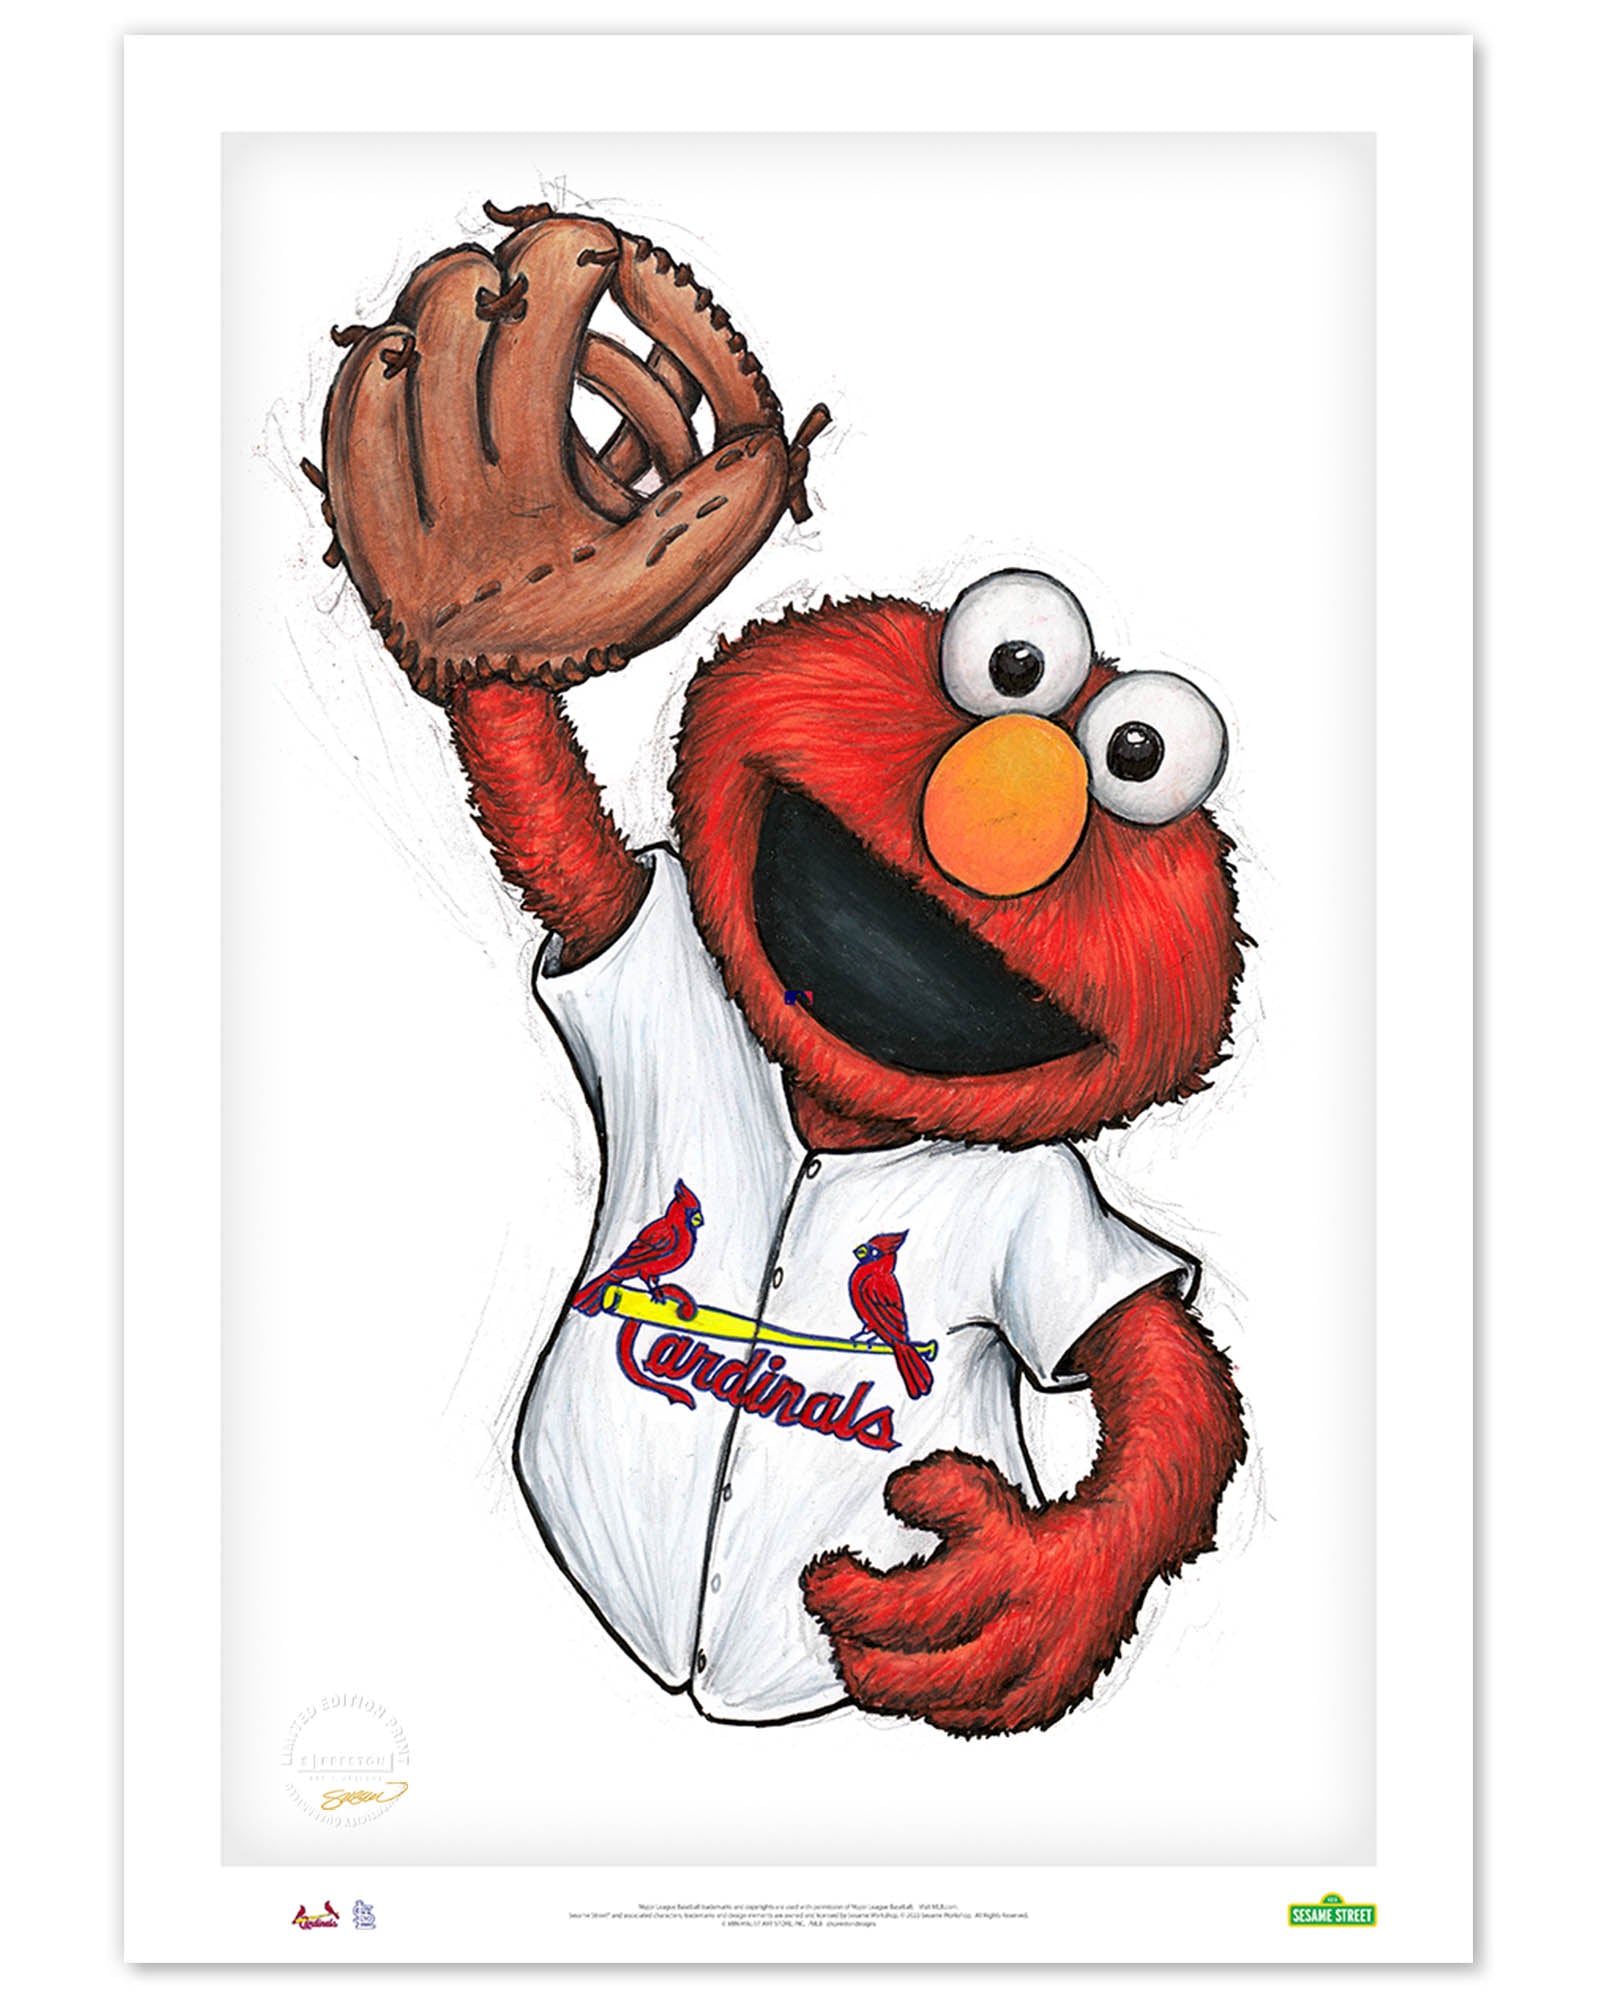 World Series - St Louis Cardinals V Canvas Print